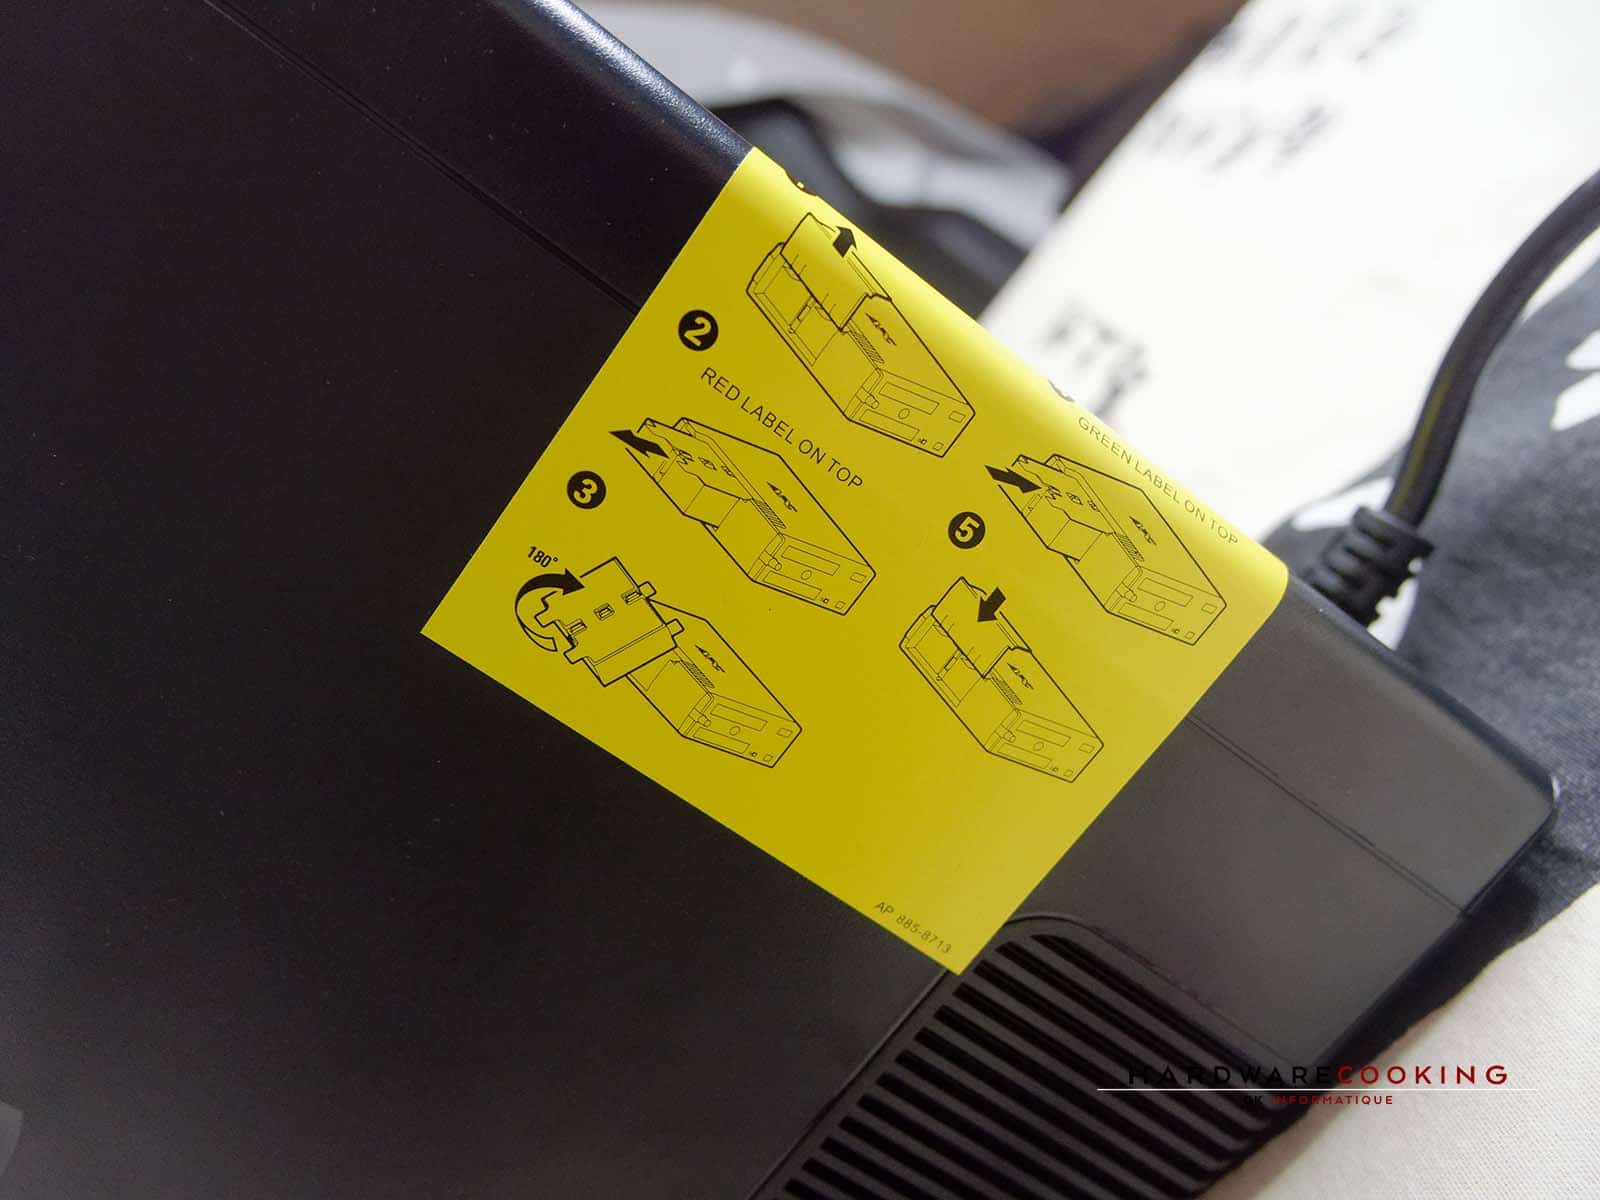 Test : onduleur APC Back-UPS Pro Green 1200VA - HardwareCooking